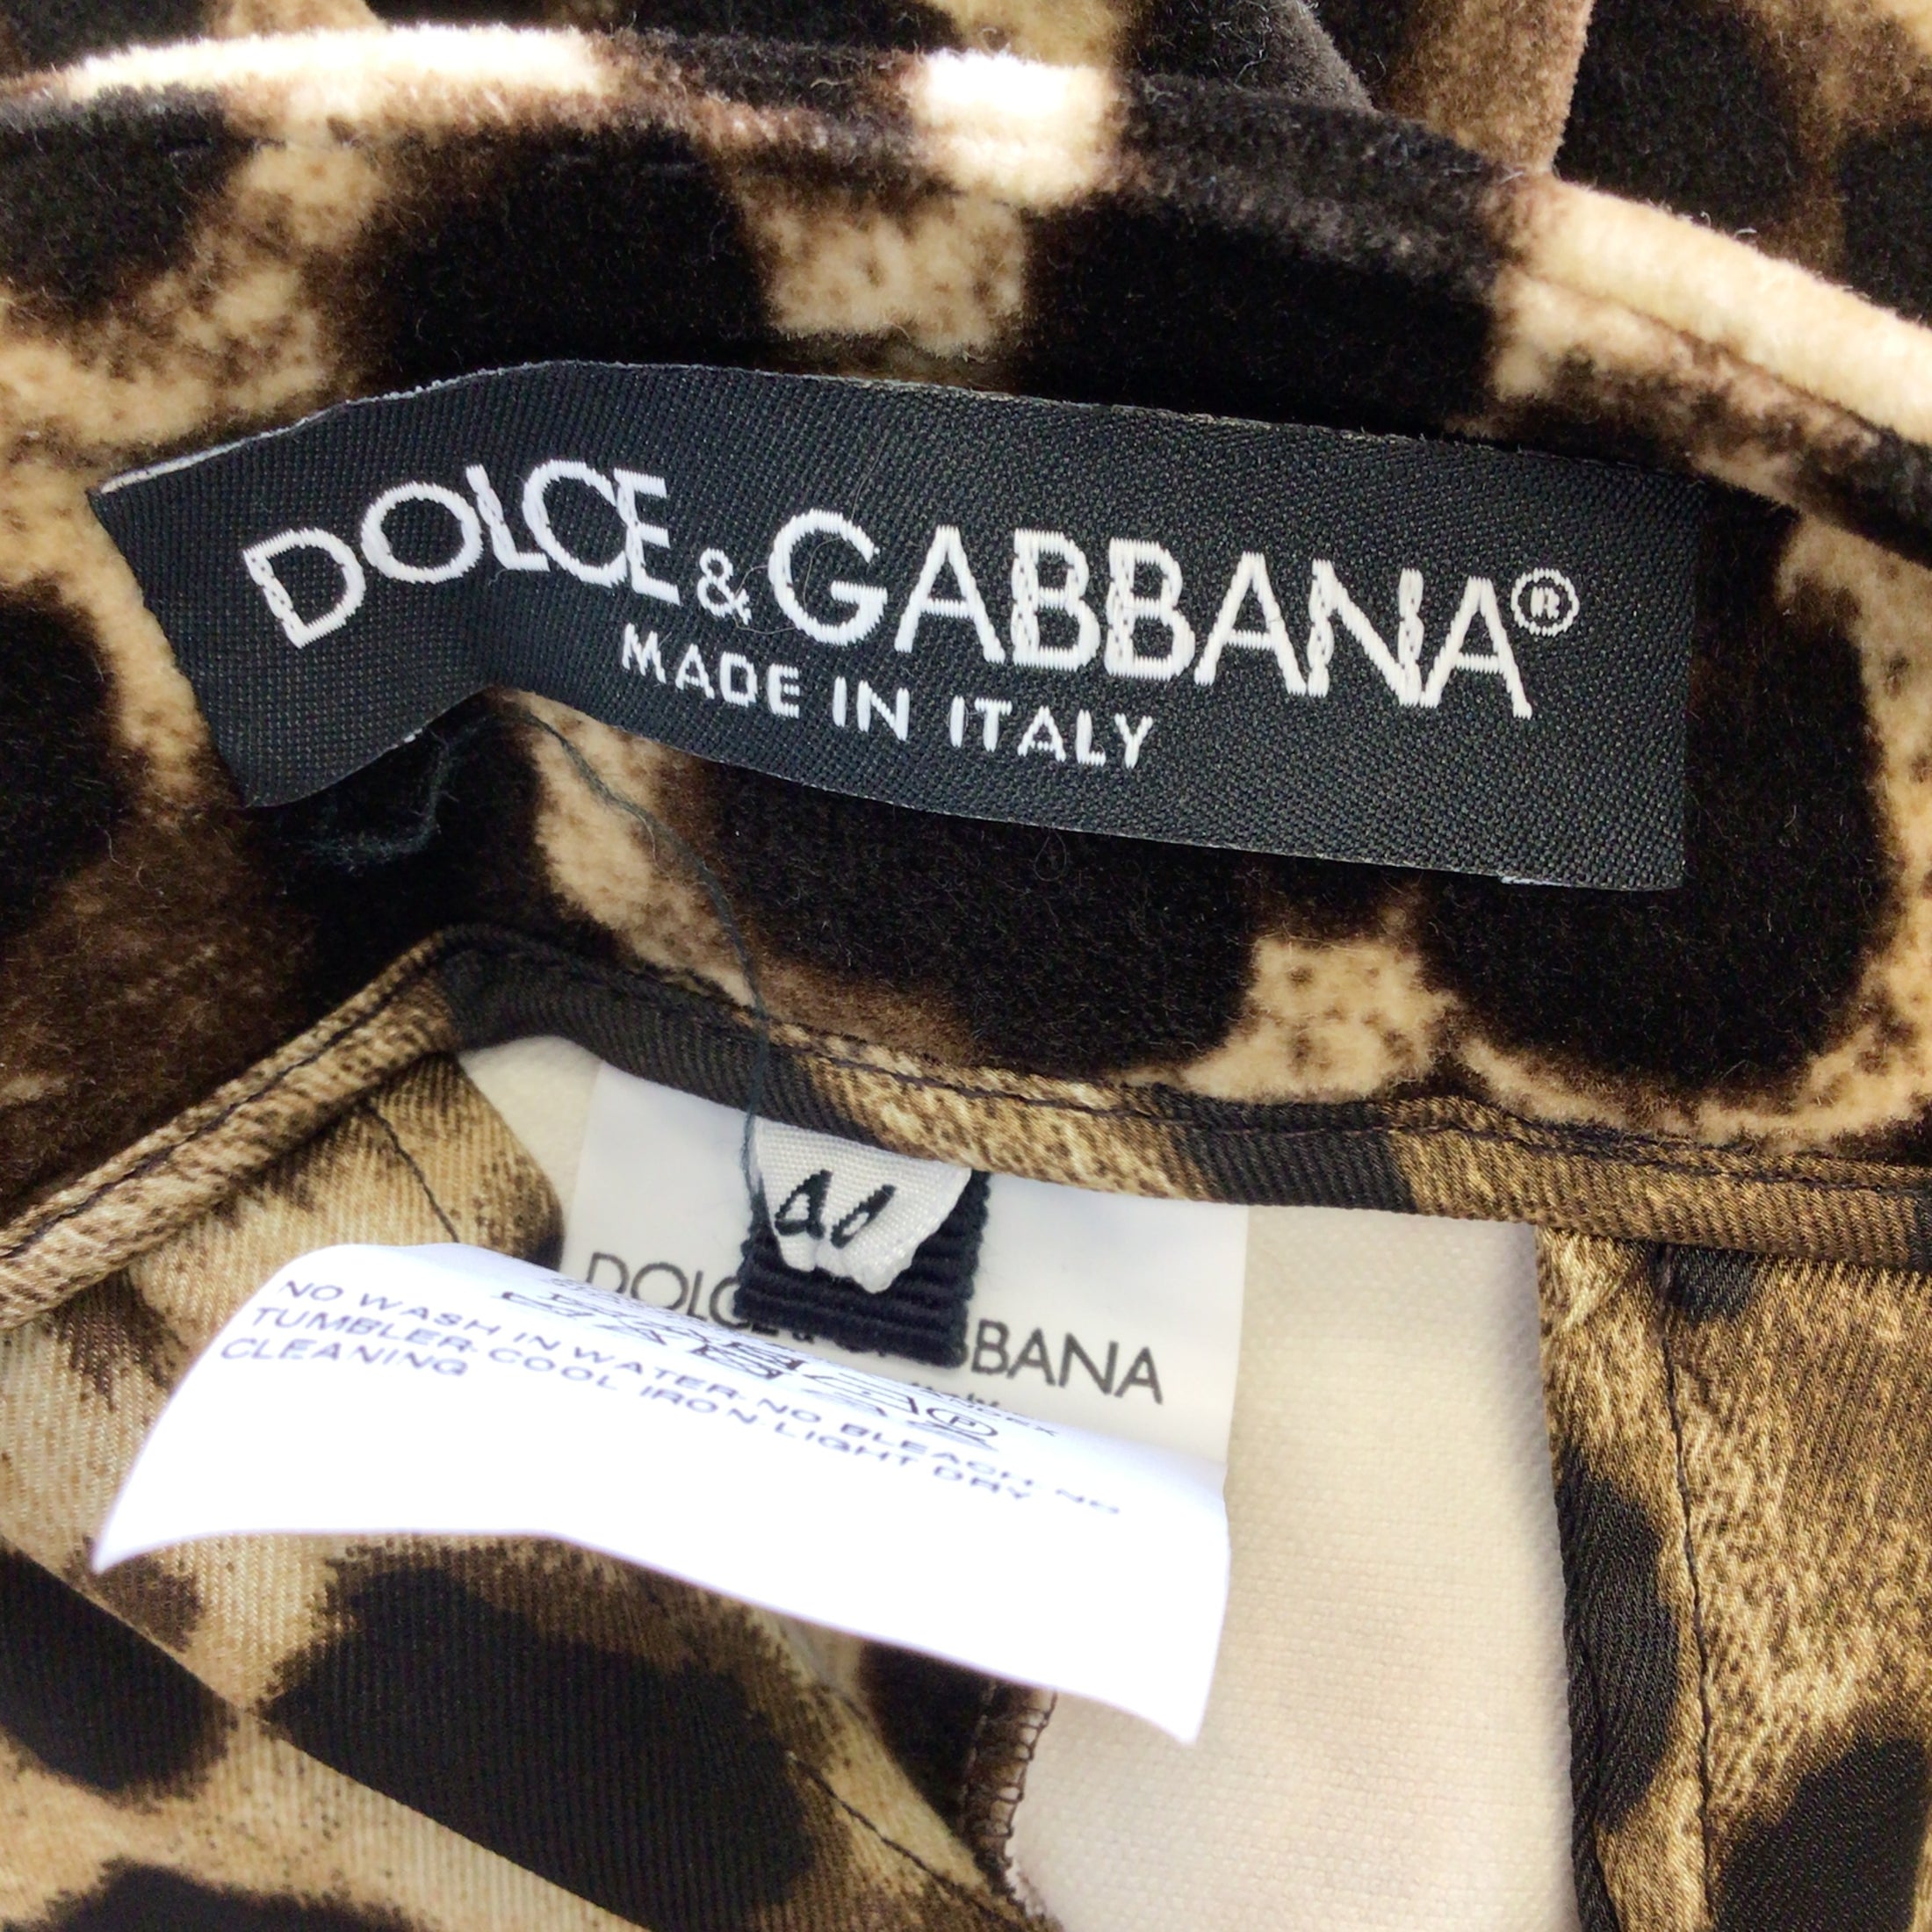 Dolce & Gabbana Tan / Brown Leopard Printed Velvet Pants